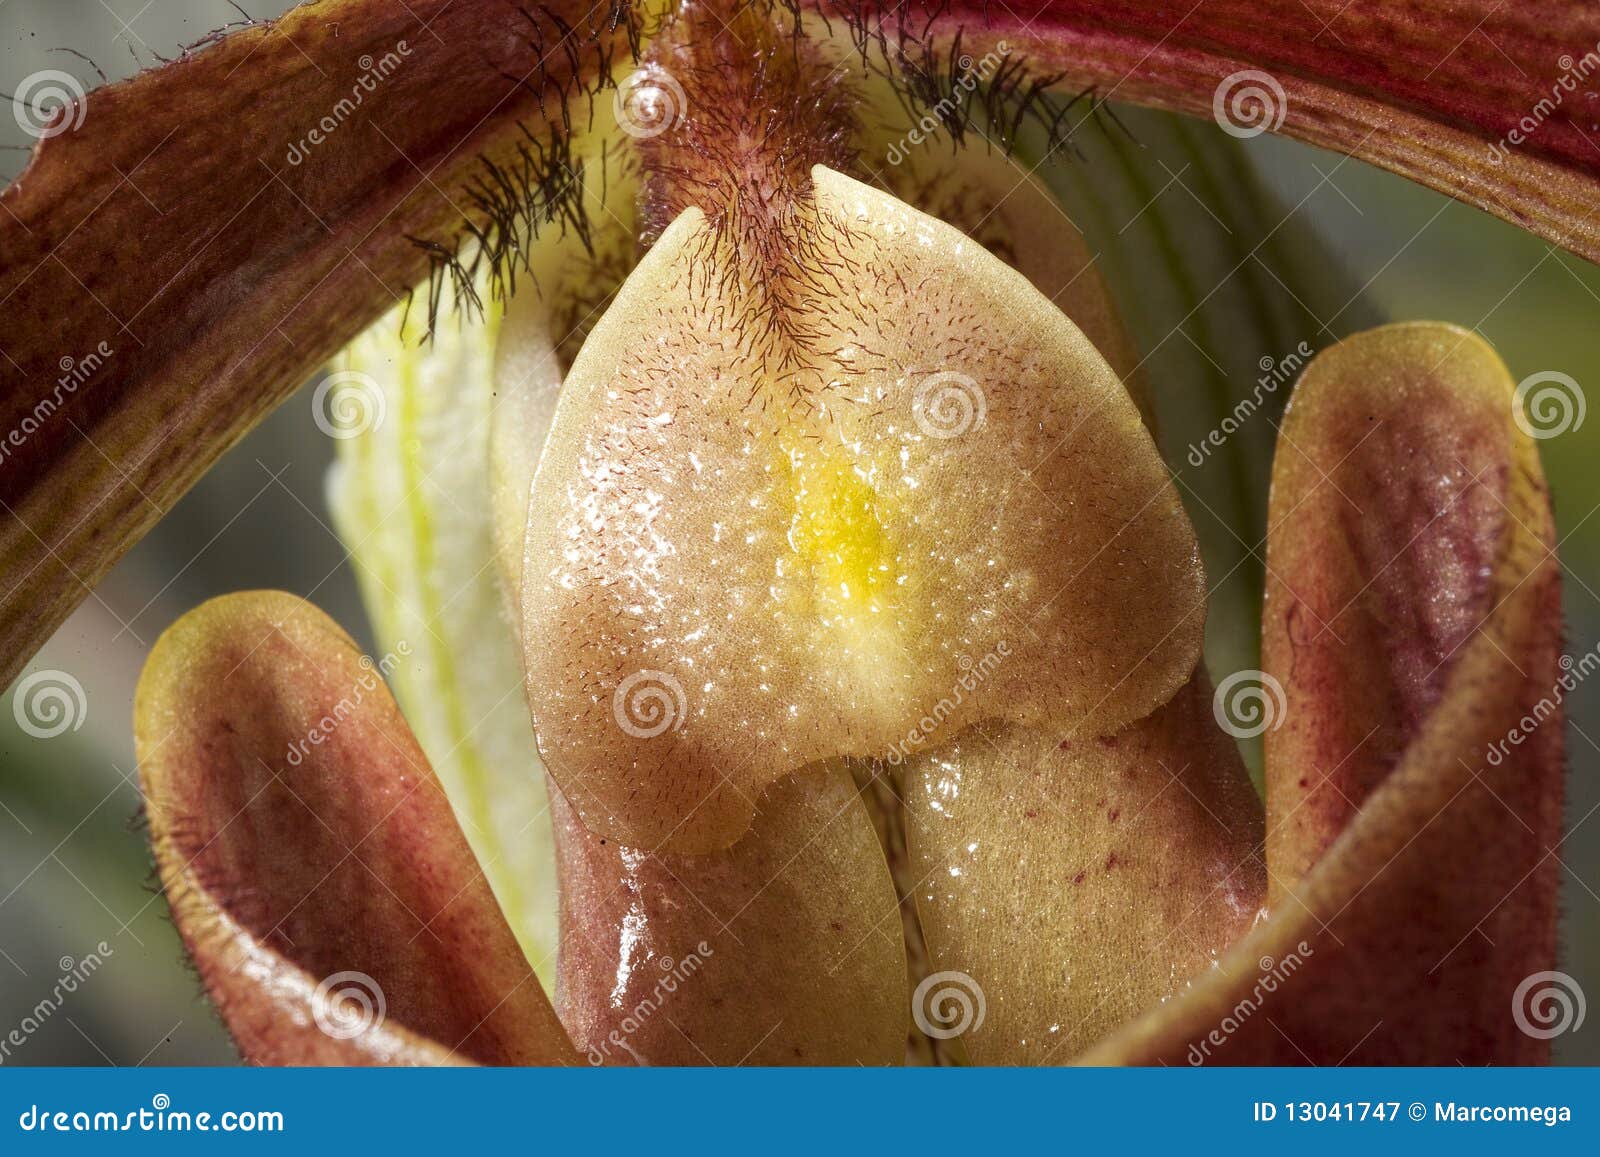 flower of paphiopedilum 'king arthur alex'